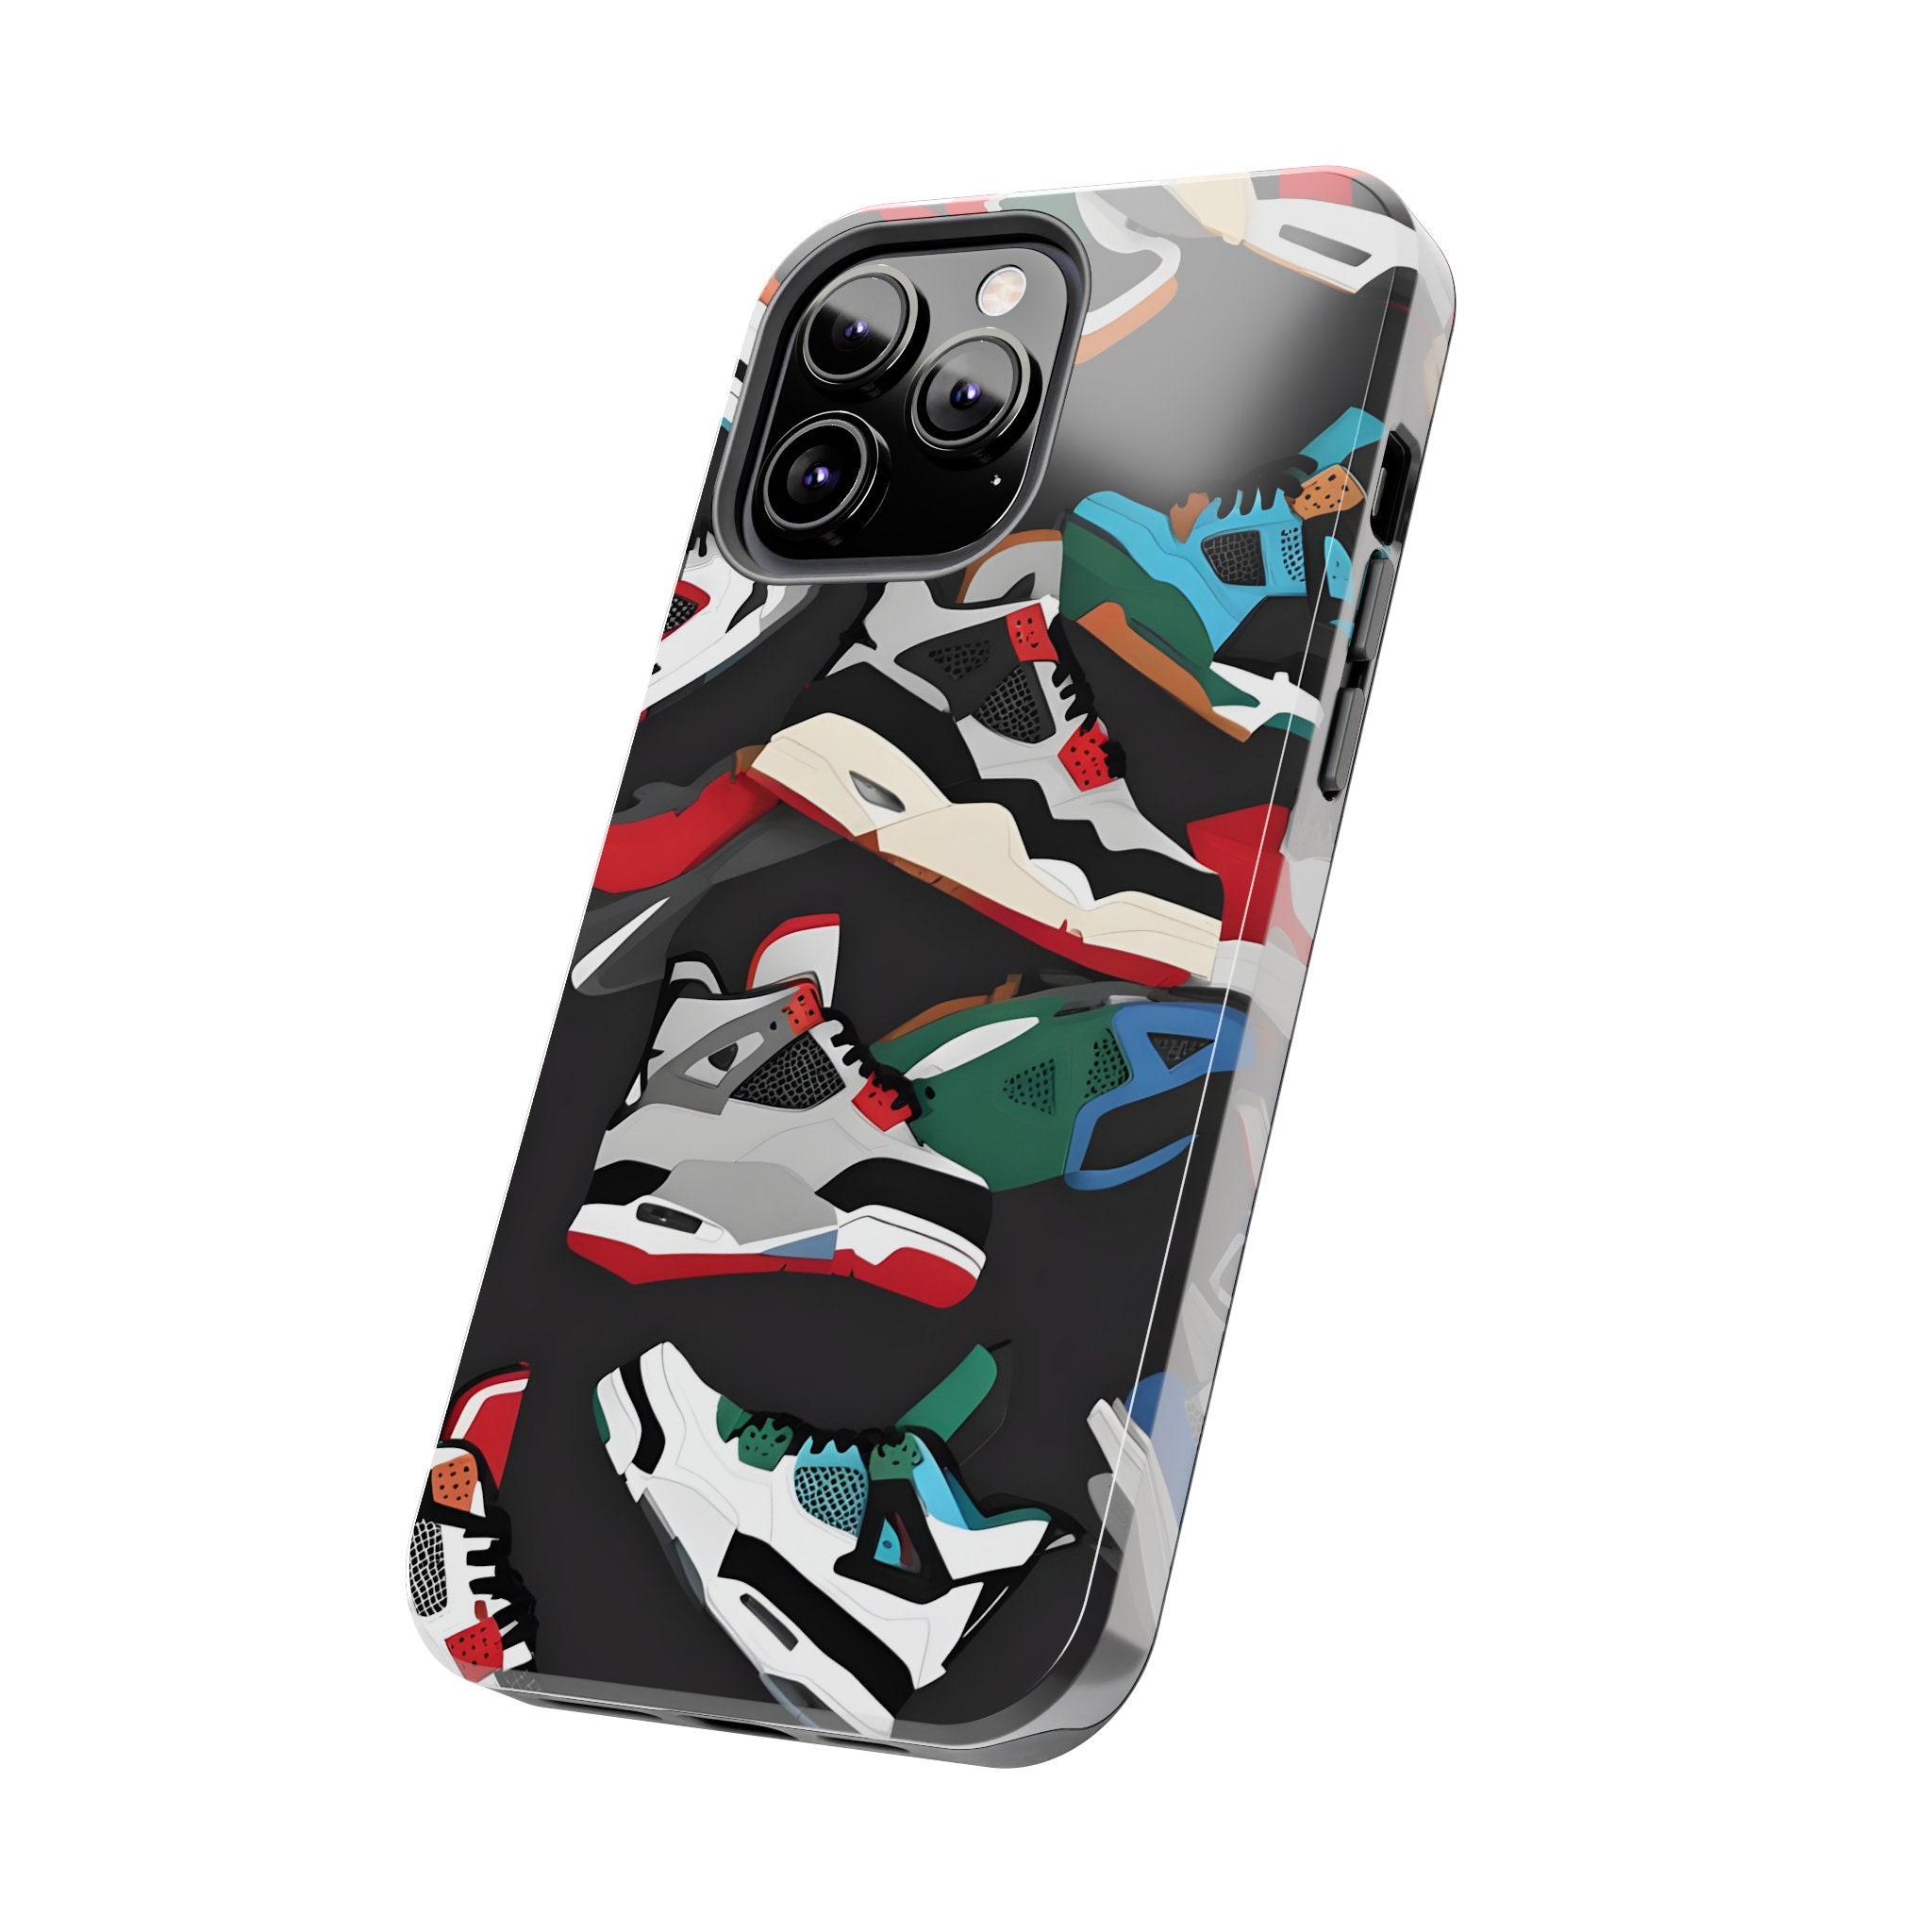 Jordan Poole - The Shot II iPhone 7 Plus Case by Chris Brown - Pixels